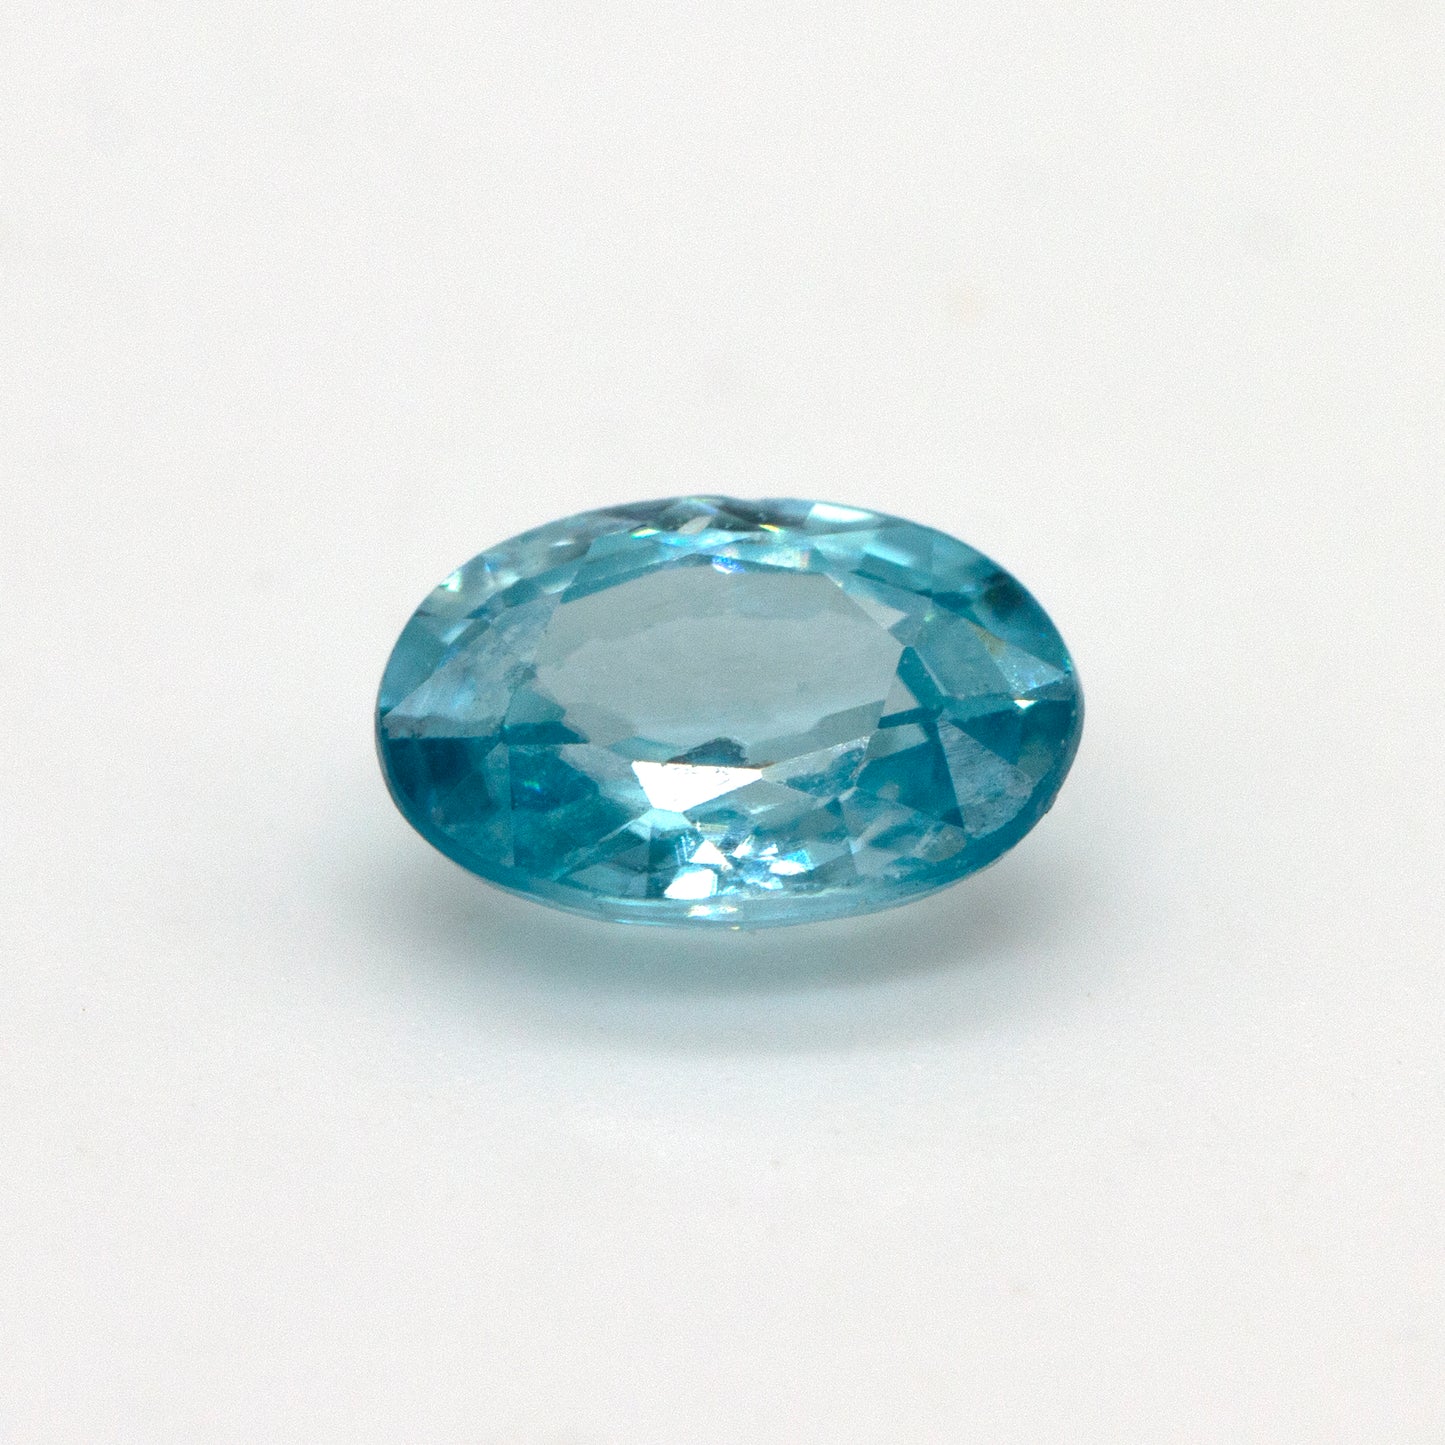 1.16ct Blue Zircon Oval Loose Stone